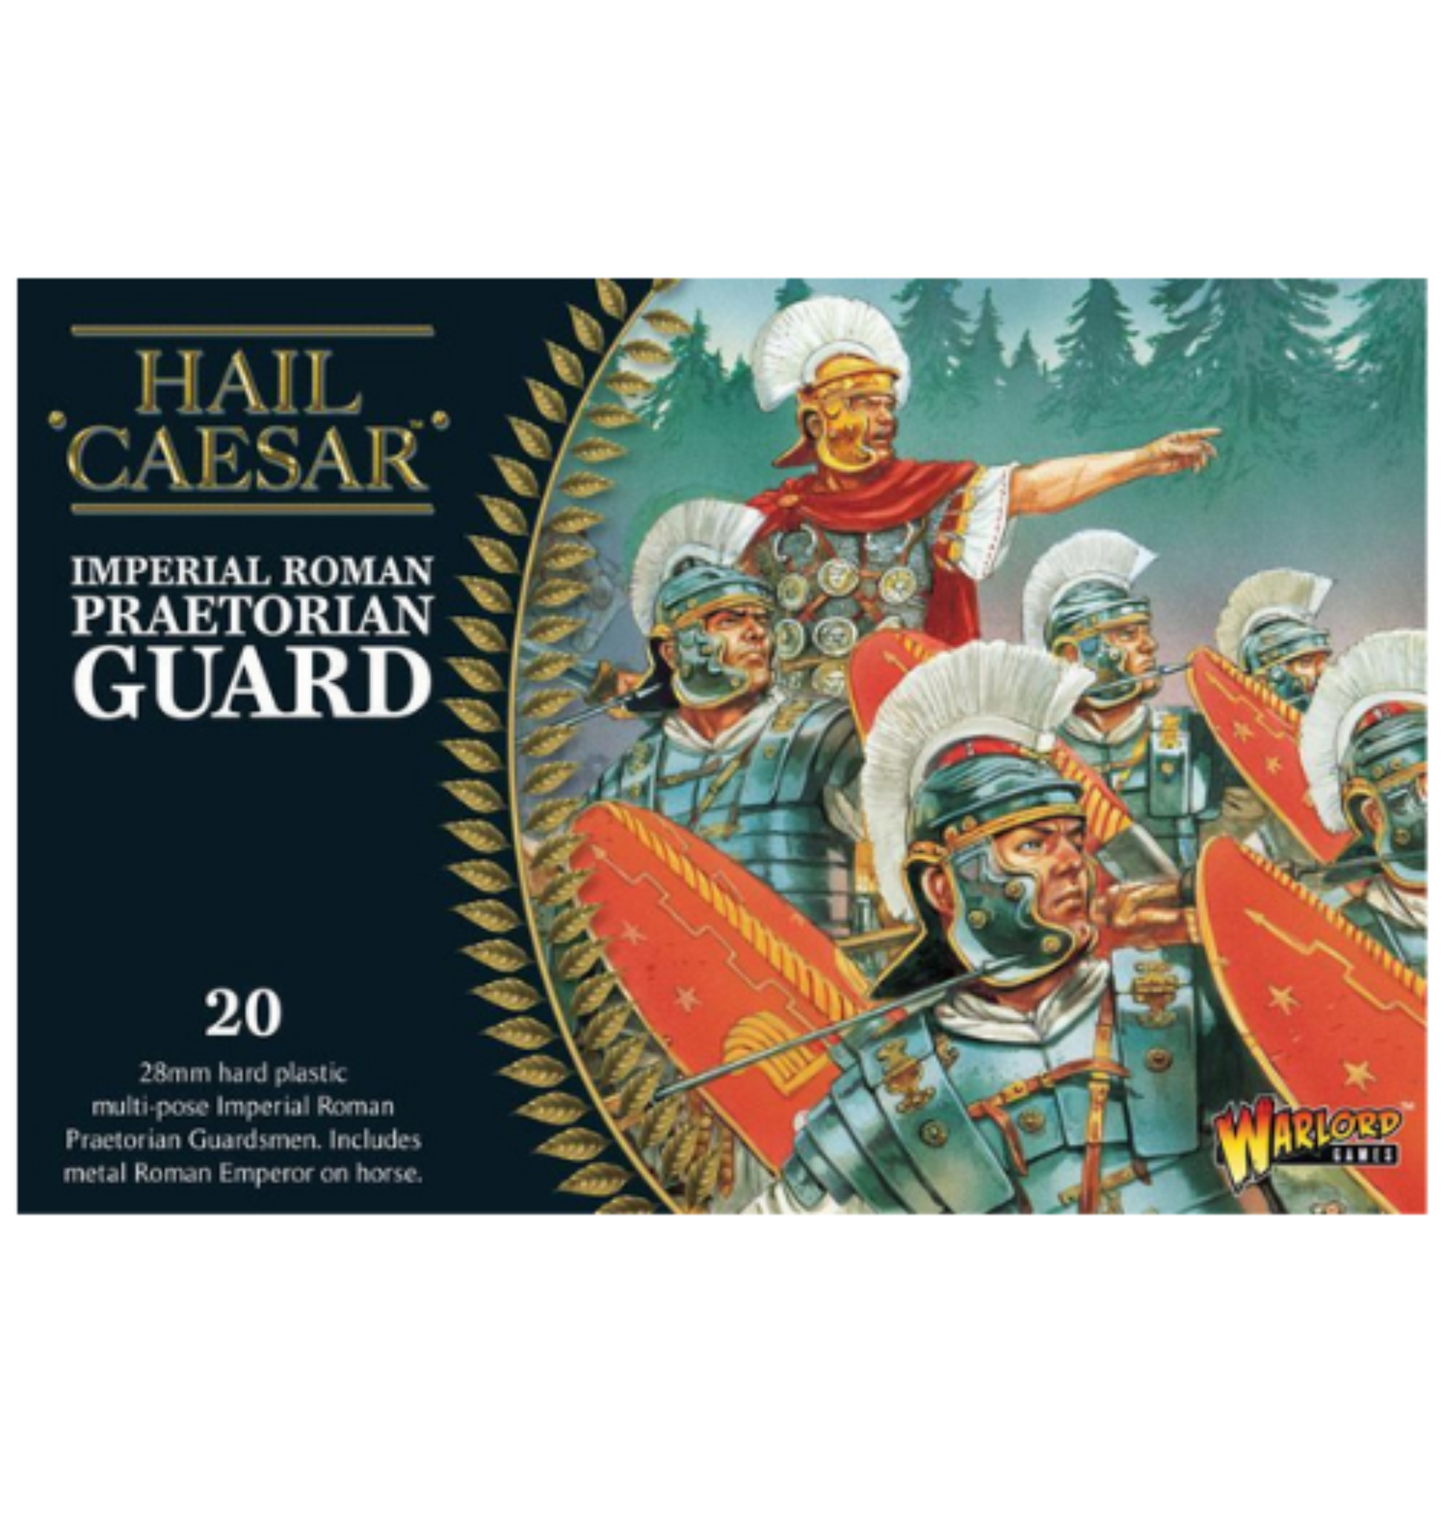 Hail Caesar - Romans: Early Imperial Romans: Praetorian Guard